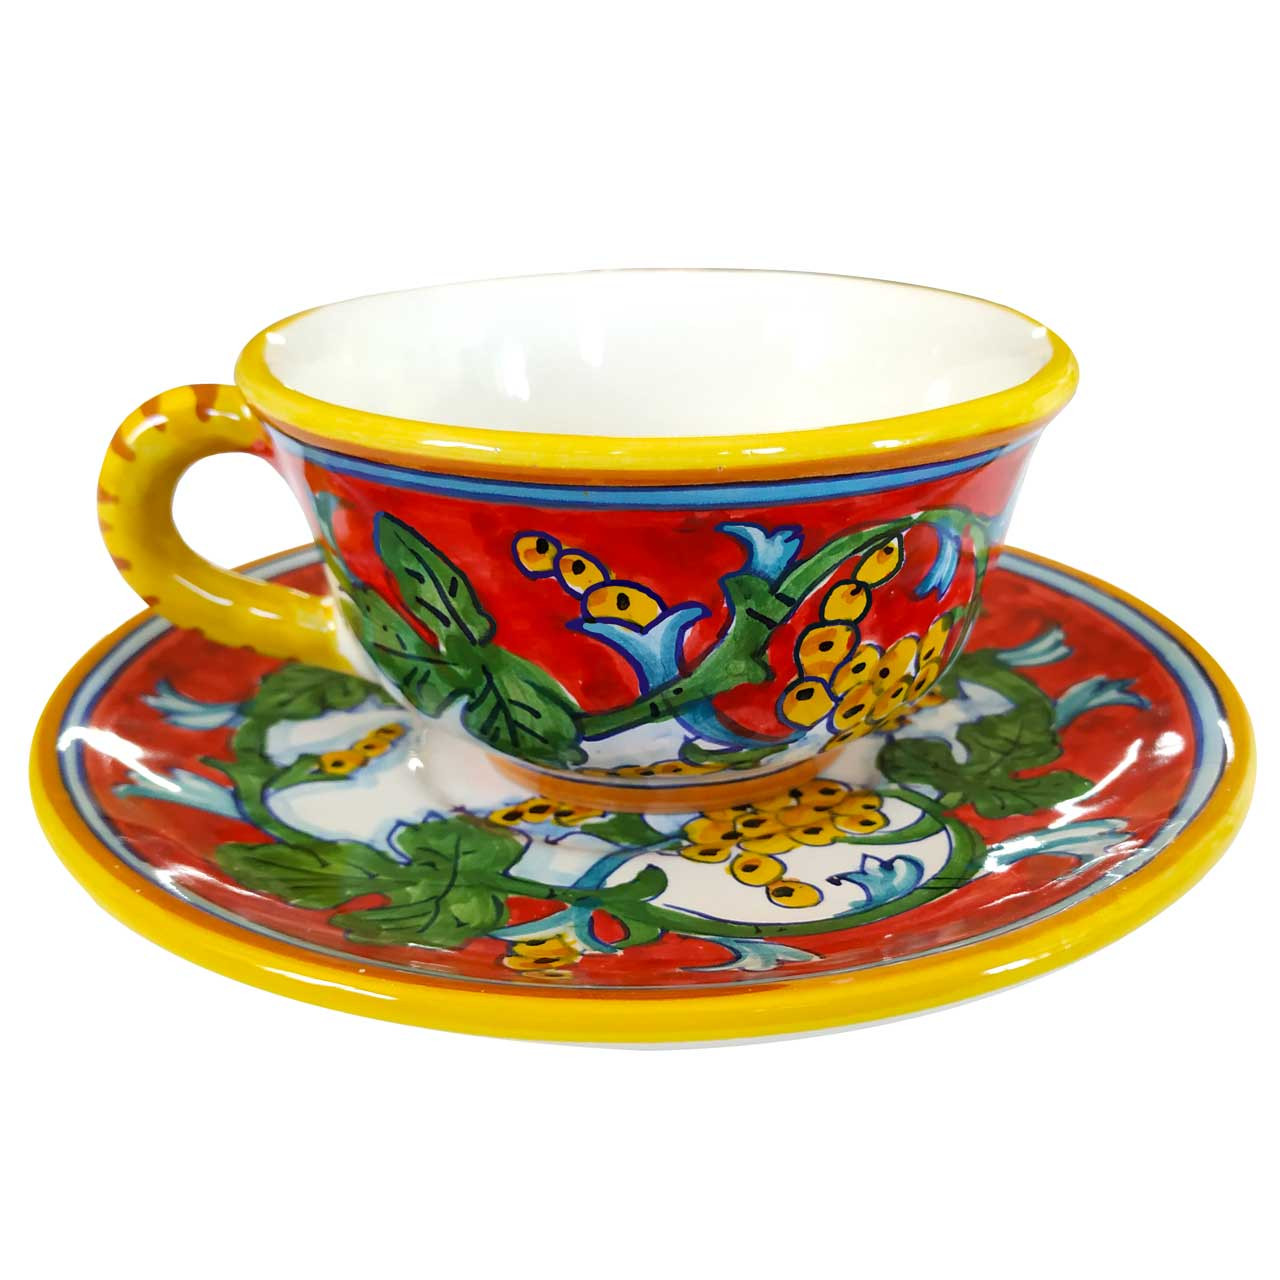 https://cdn11.bigcommerce.com/s-ukqi7wk1fh/images/stencil/1280x1280/products/1298/5350/Italian-Tea-Cup-of-Pottery-Mod-Ceramics__71979.1641849179.jpg?c=2